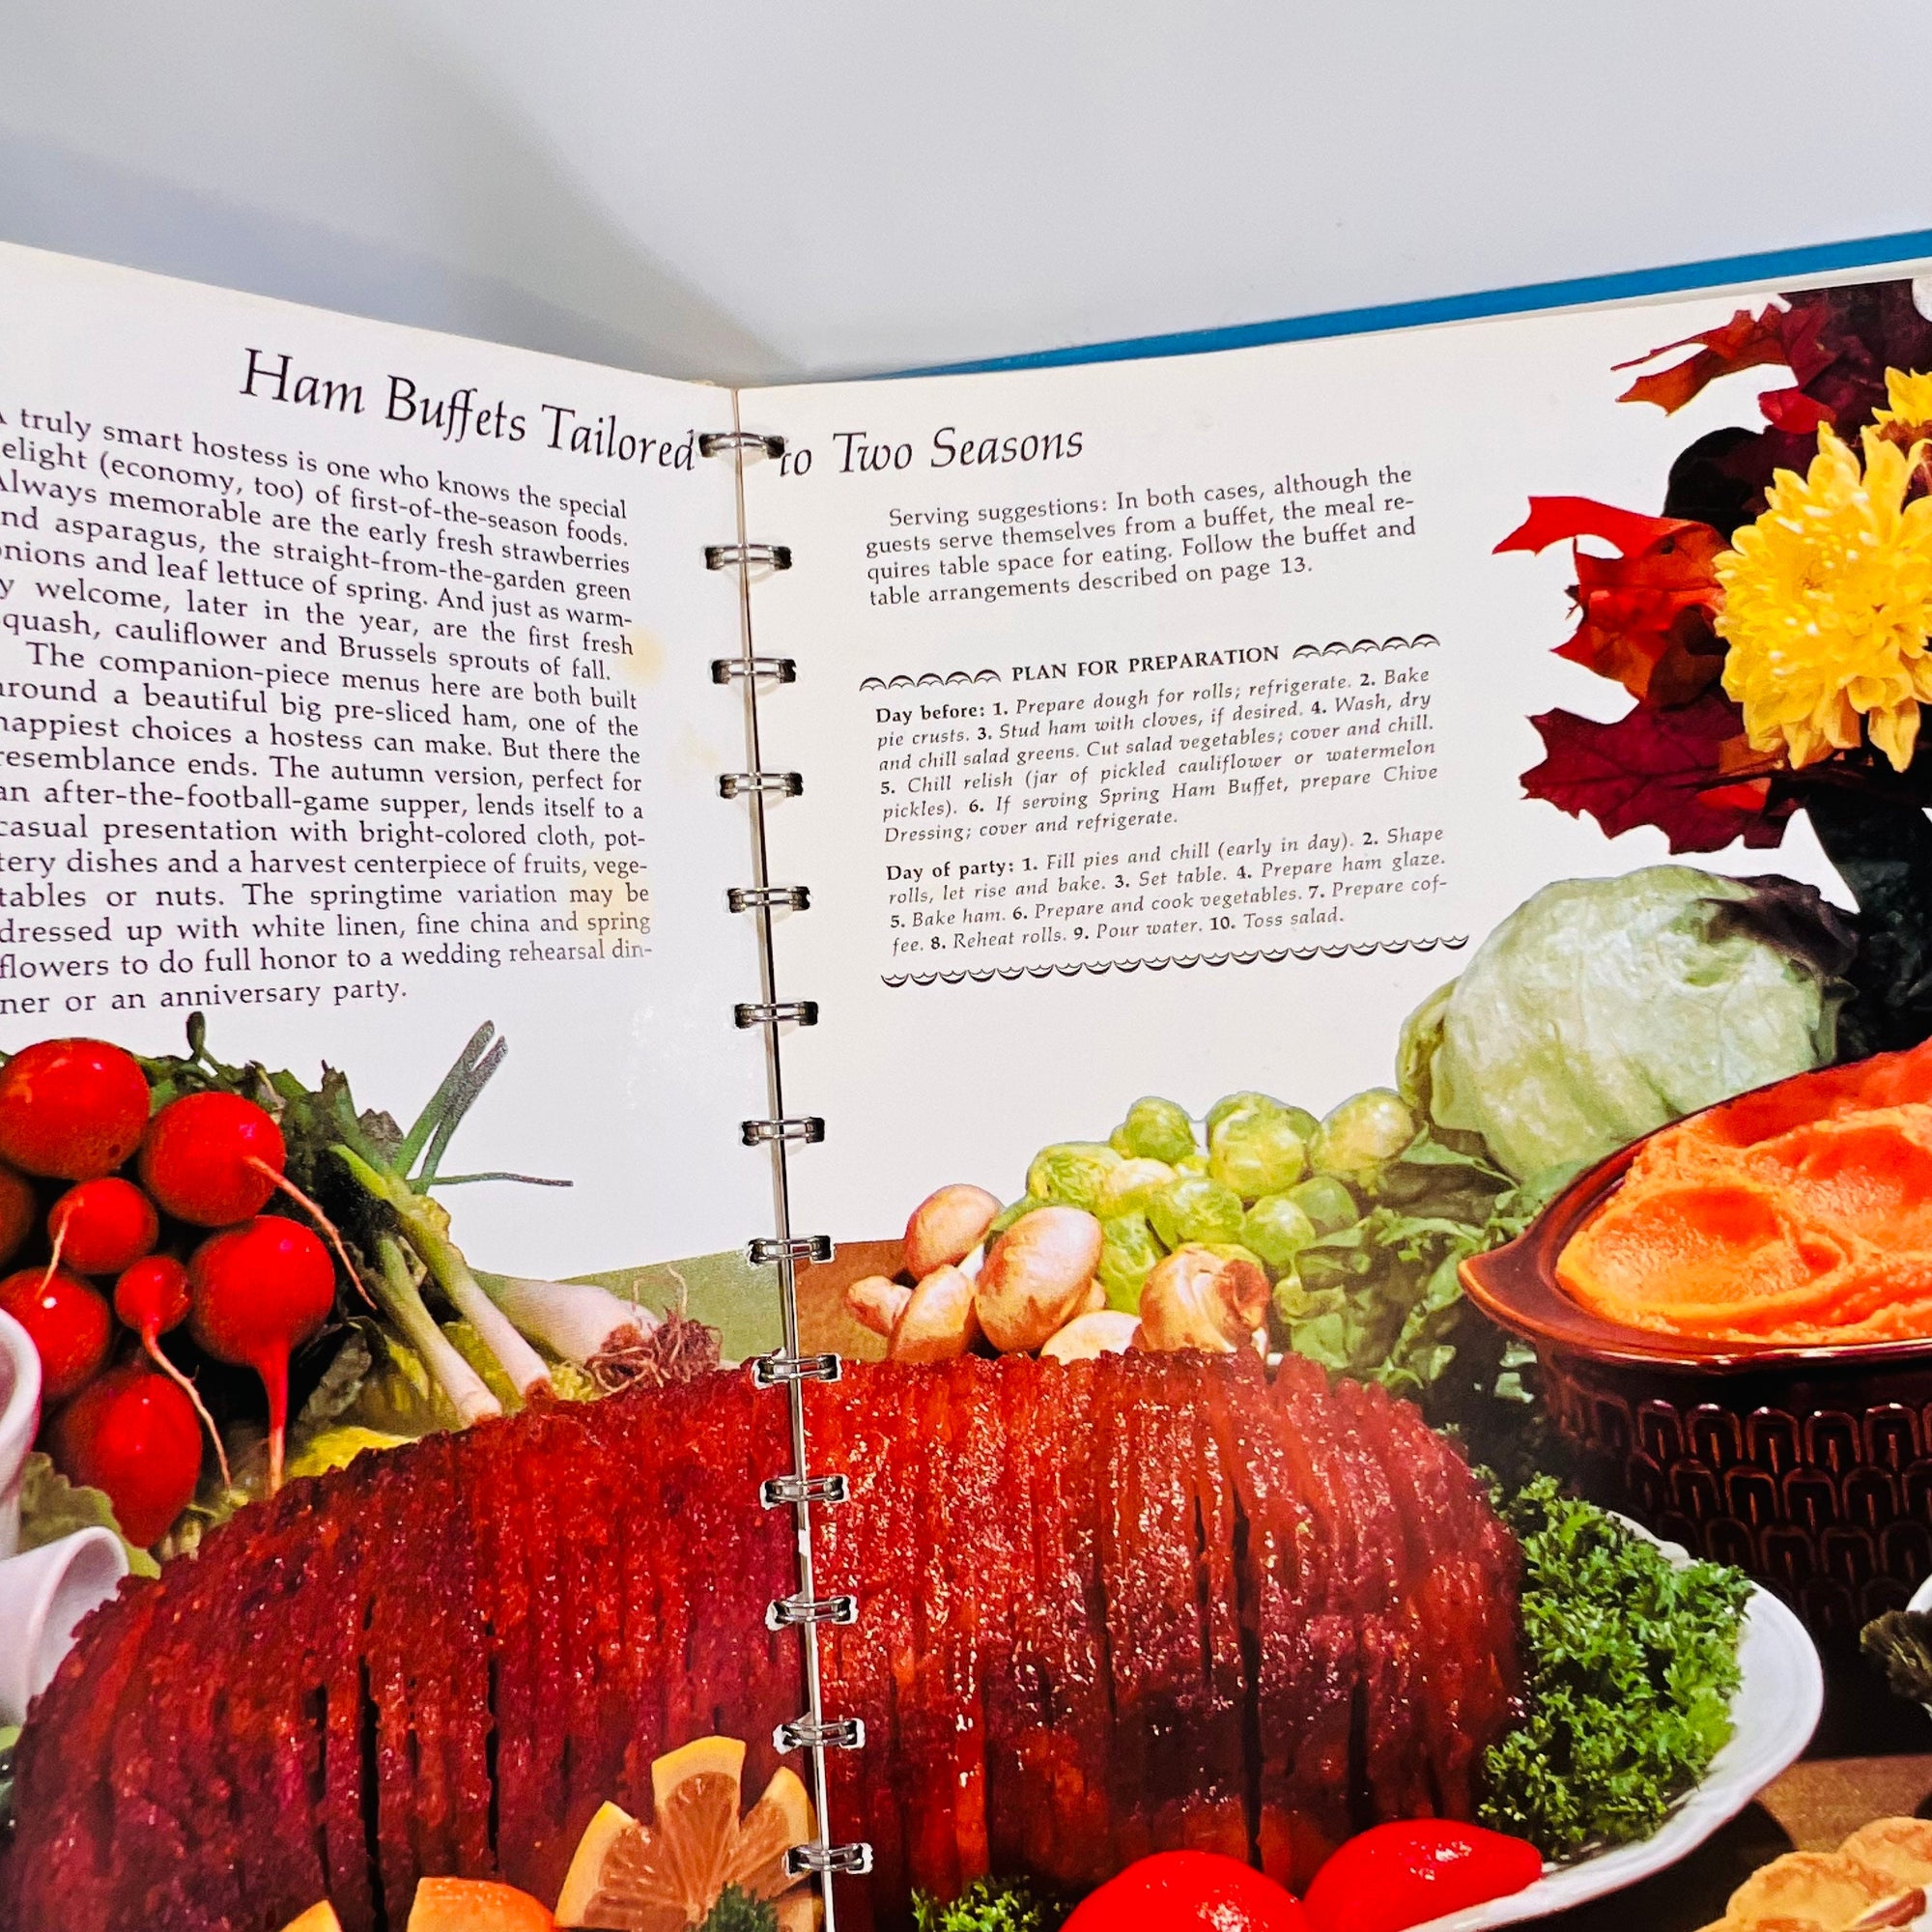 Betty Crocker Hostess Cookbook A Wealth of Ideas for Todays Entertaining 1967 Golden Press Vintage Cookbook